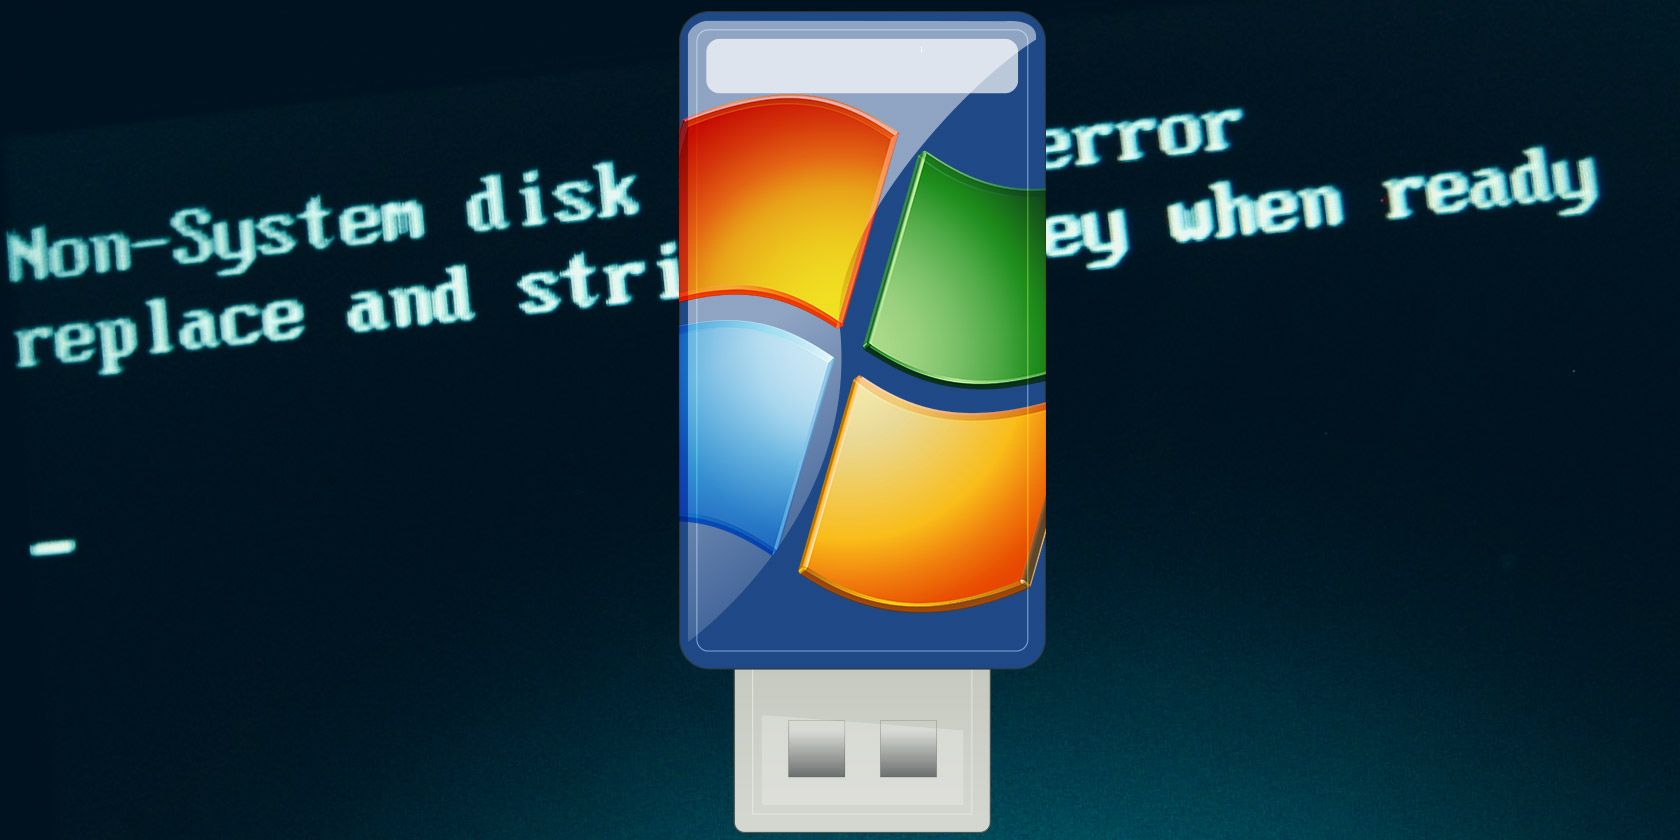 disk image creator smaller drive